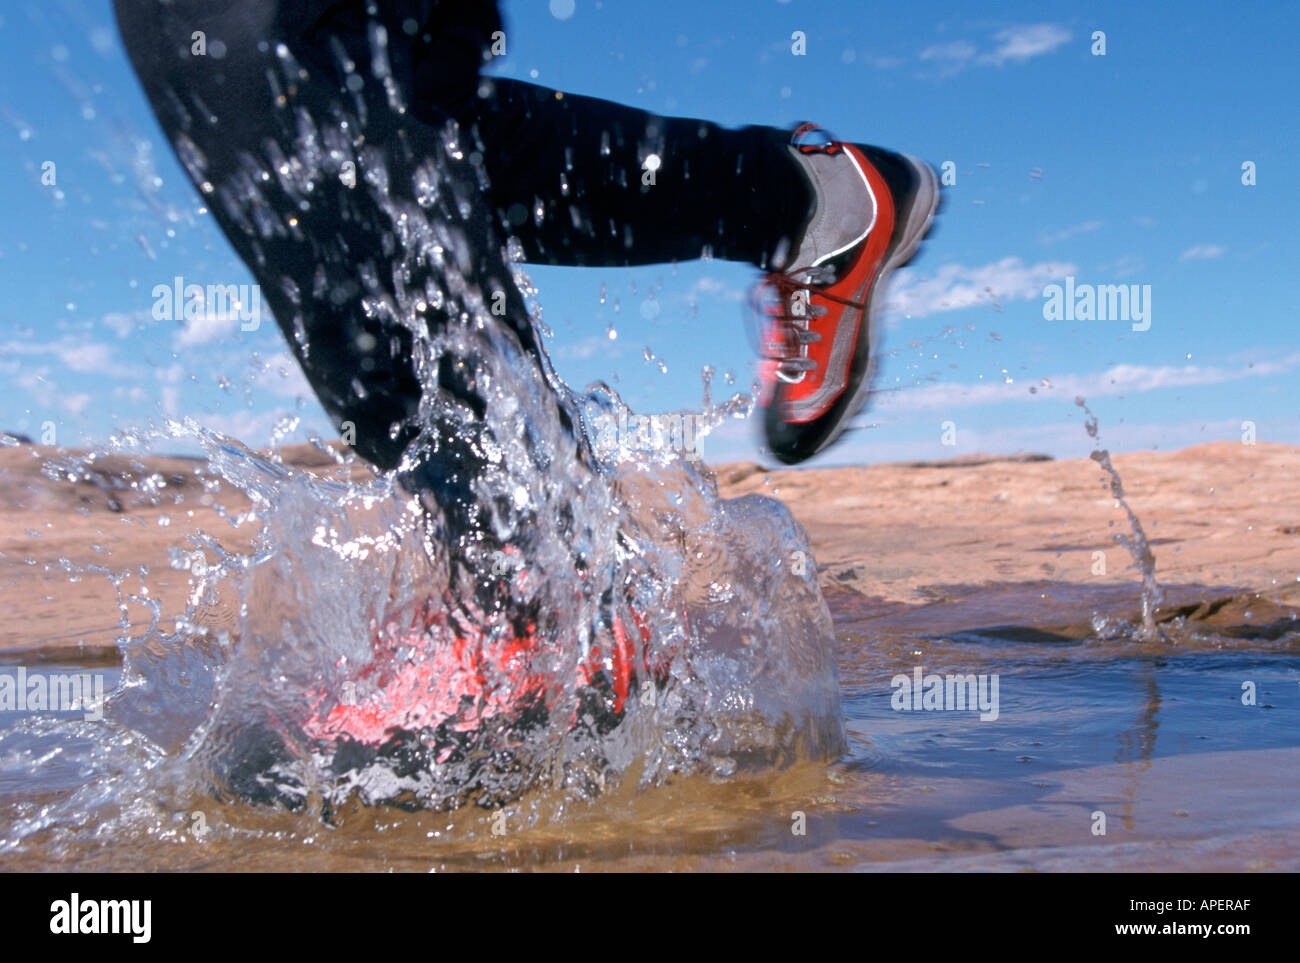 Runner splashing in puddle Stock Photo